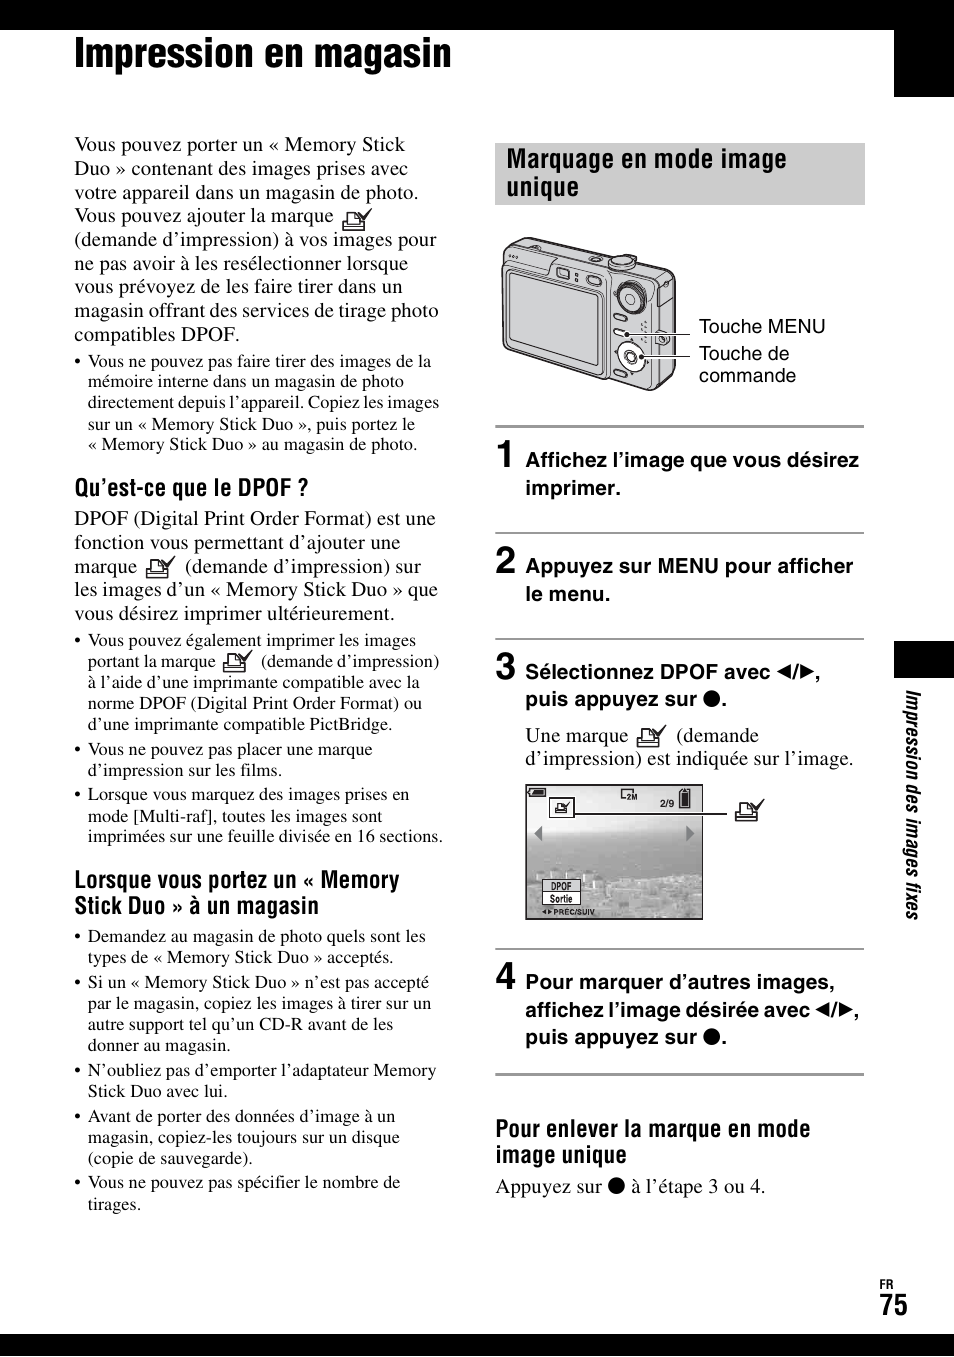 Impression en magasin, Marquage en mode image unique | Sony DSC-W50 Manuale d'uso | Pagina 75 / 215